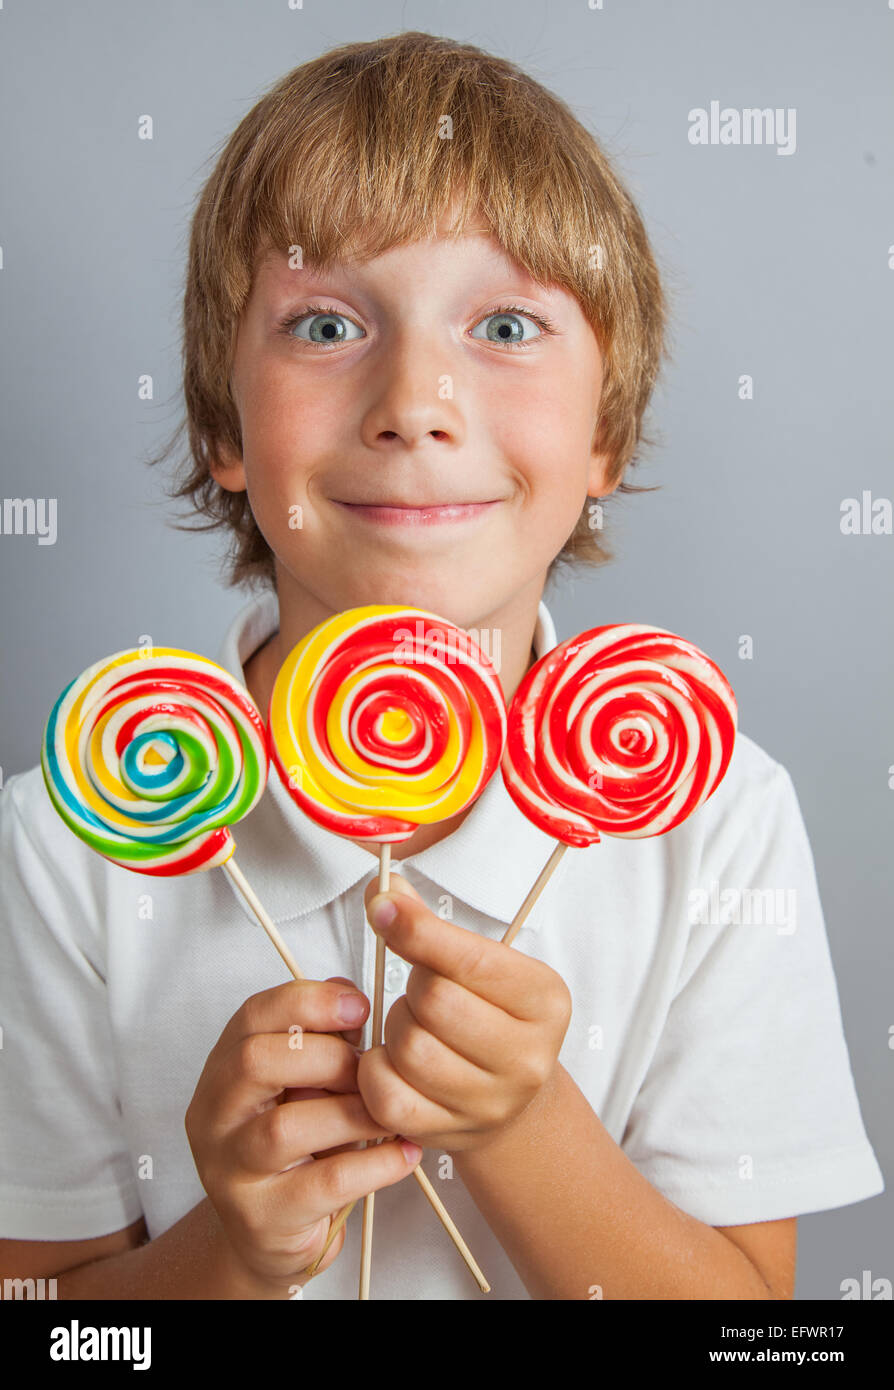 child boy eating lollipop Stock Photo